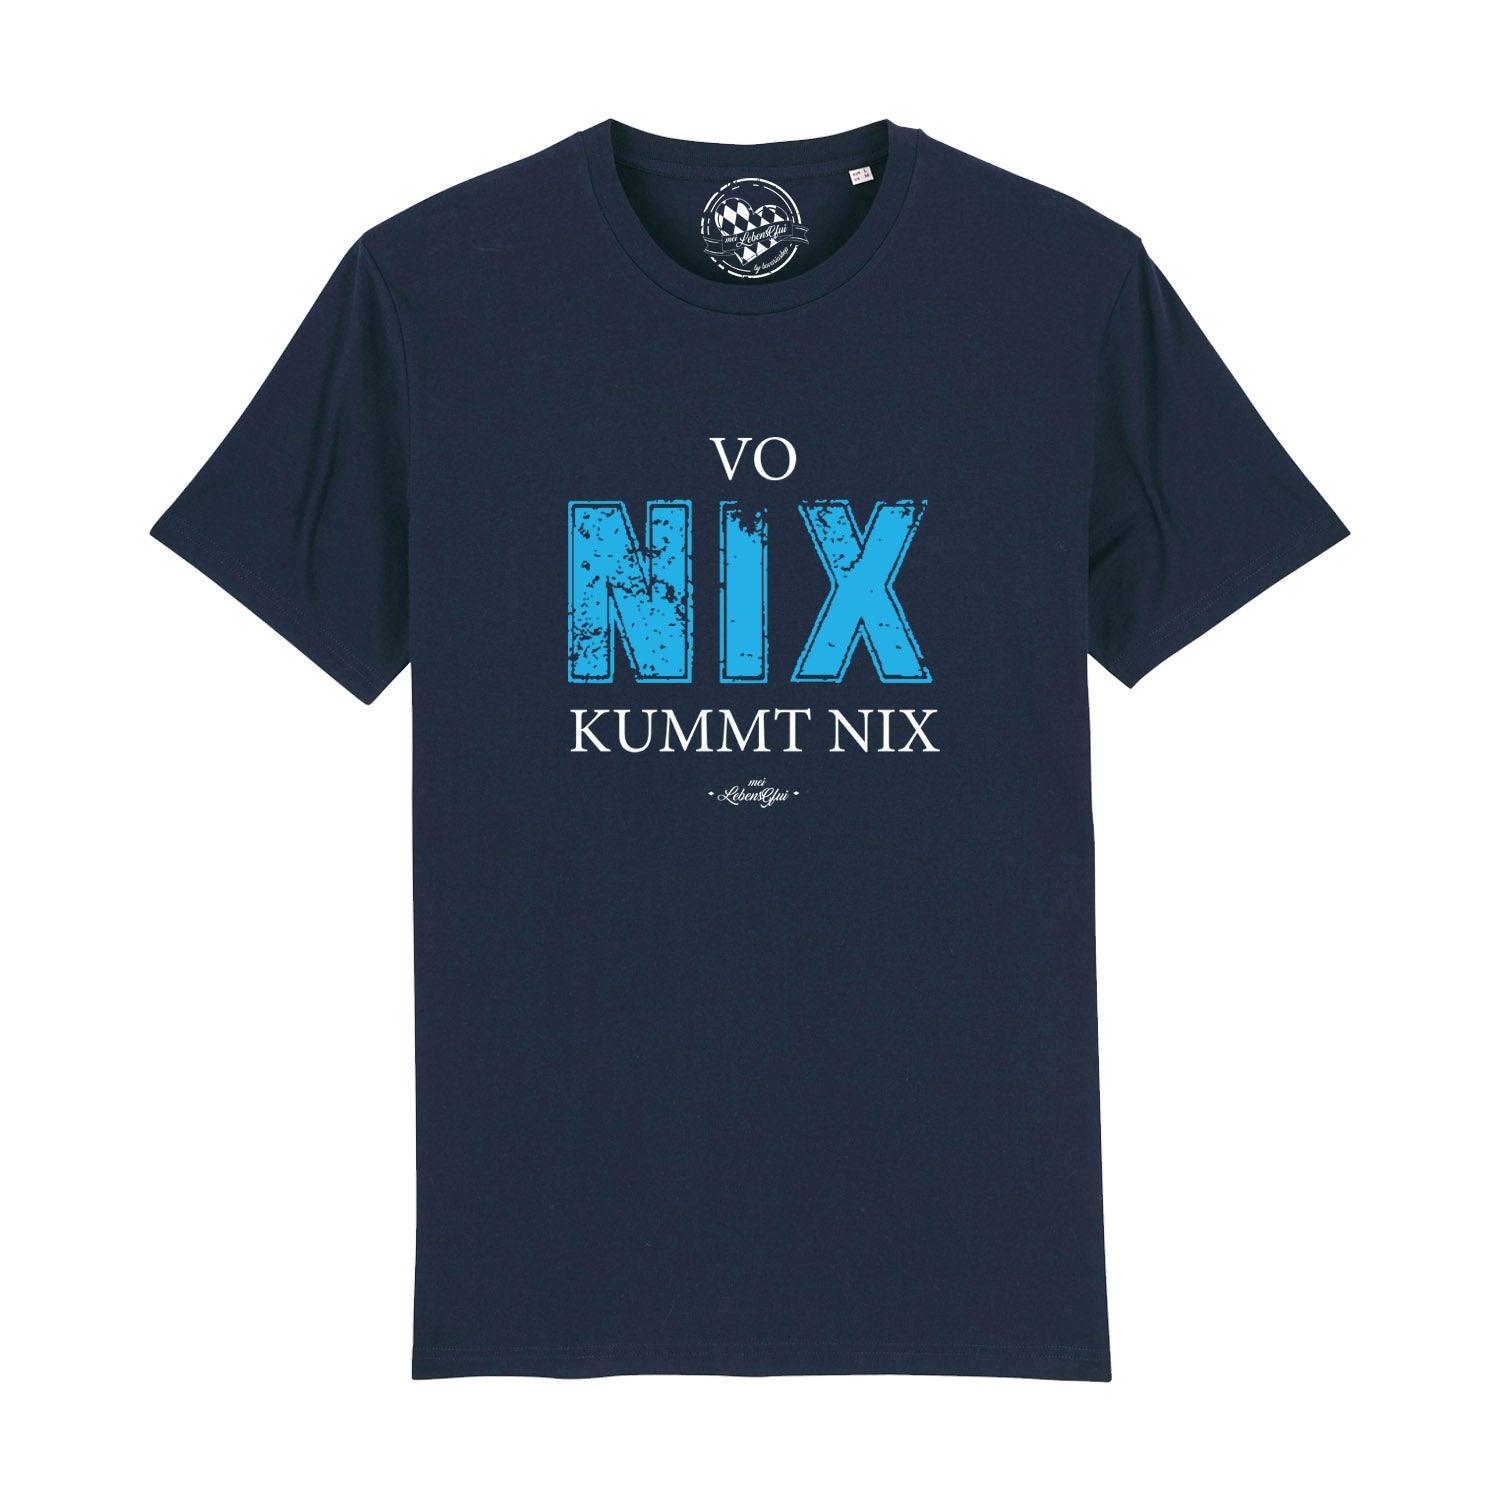 Herren T-Shirt "Vo nix kummt nix" - bavariashop - mei LebensGfui